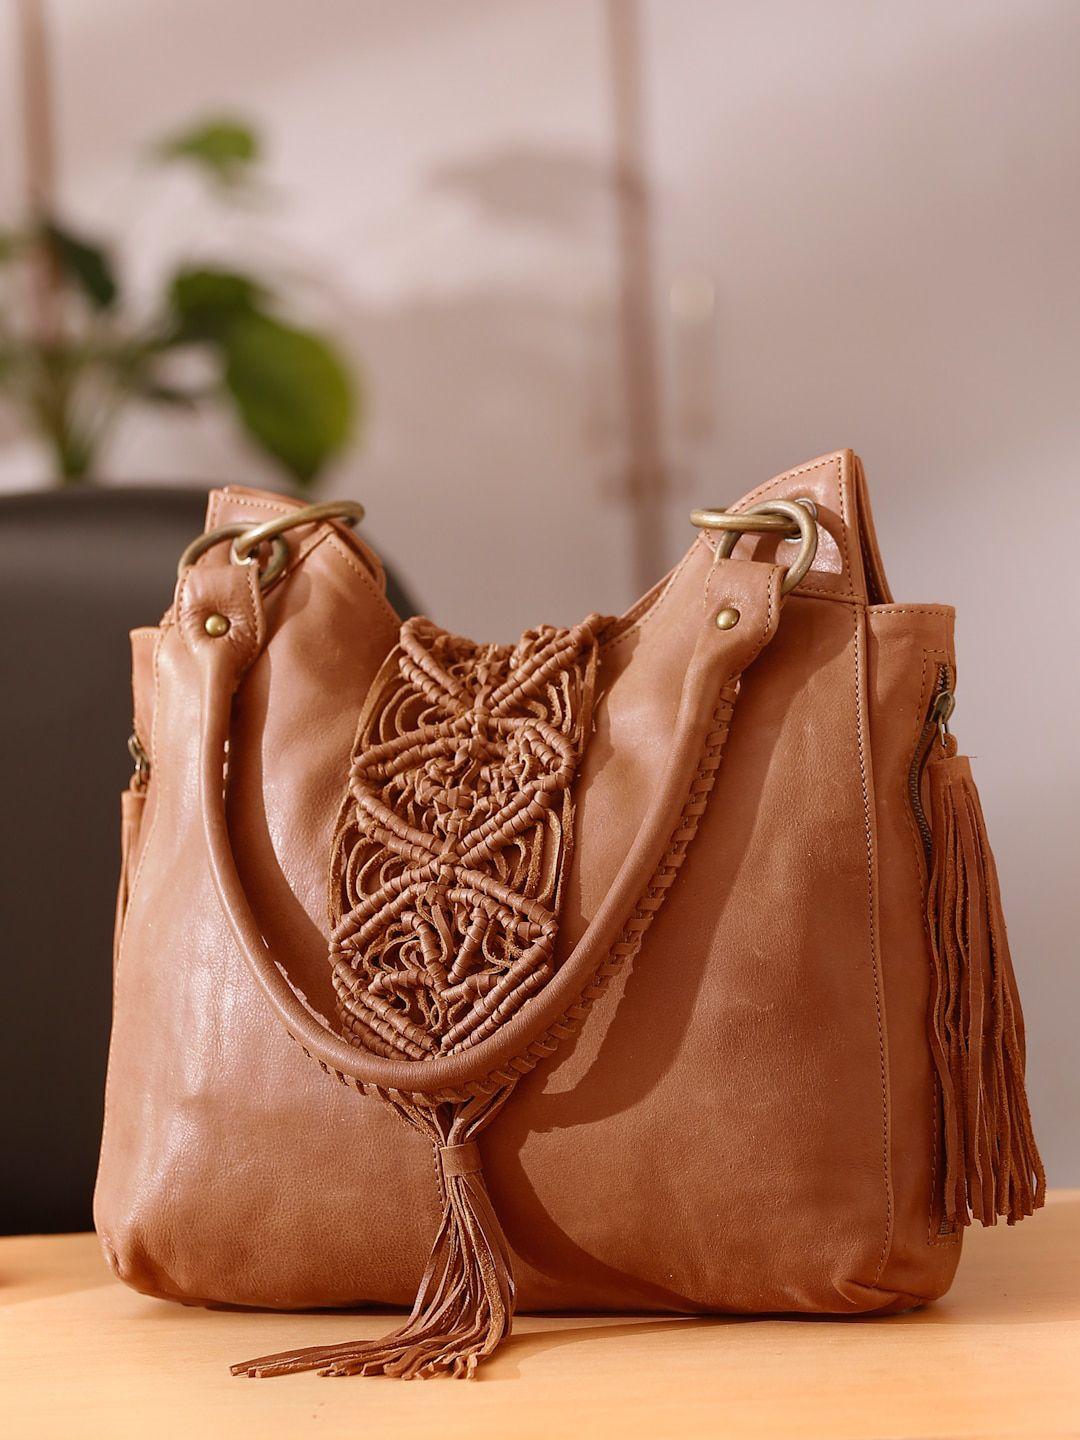 suvaska tan textured leather oversized structured hobo bag